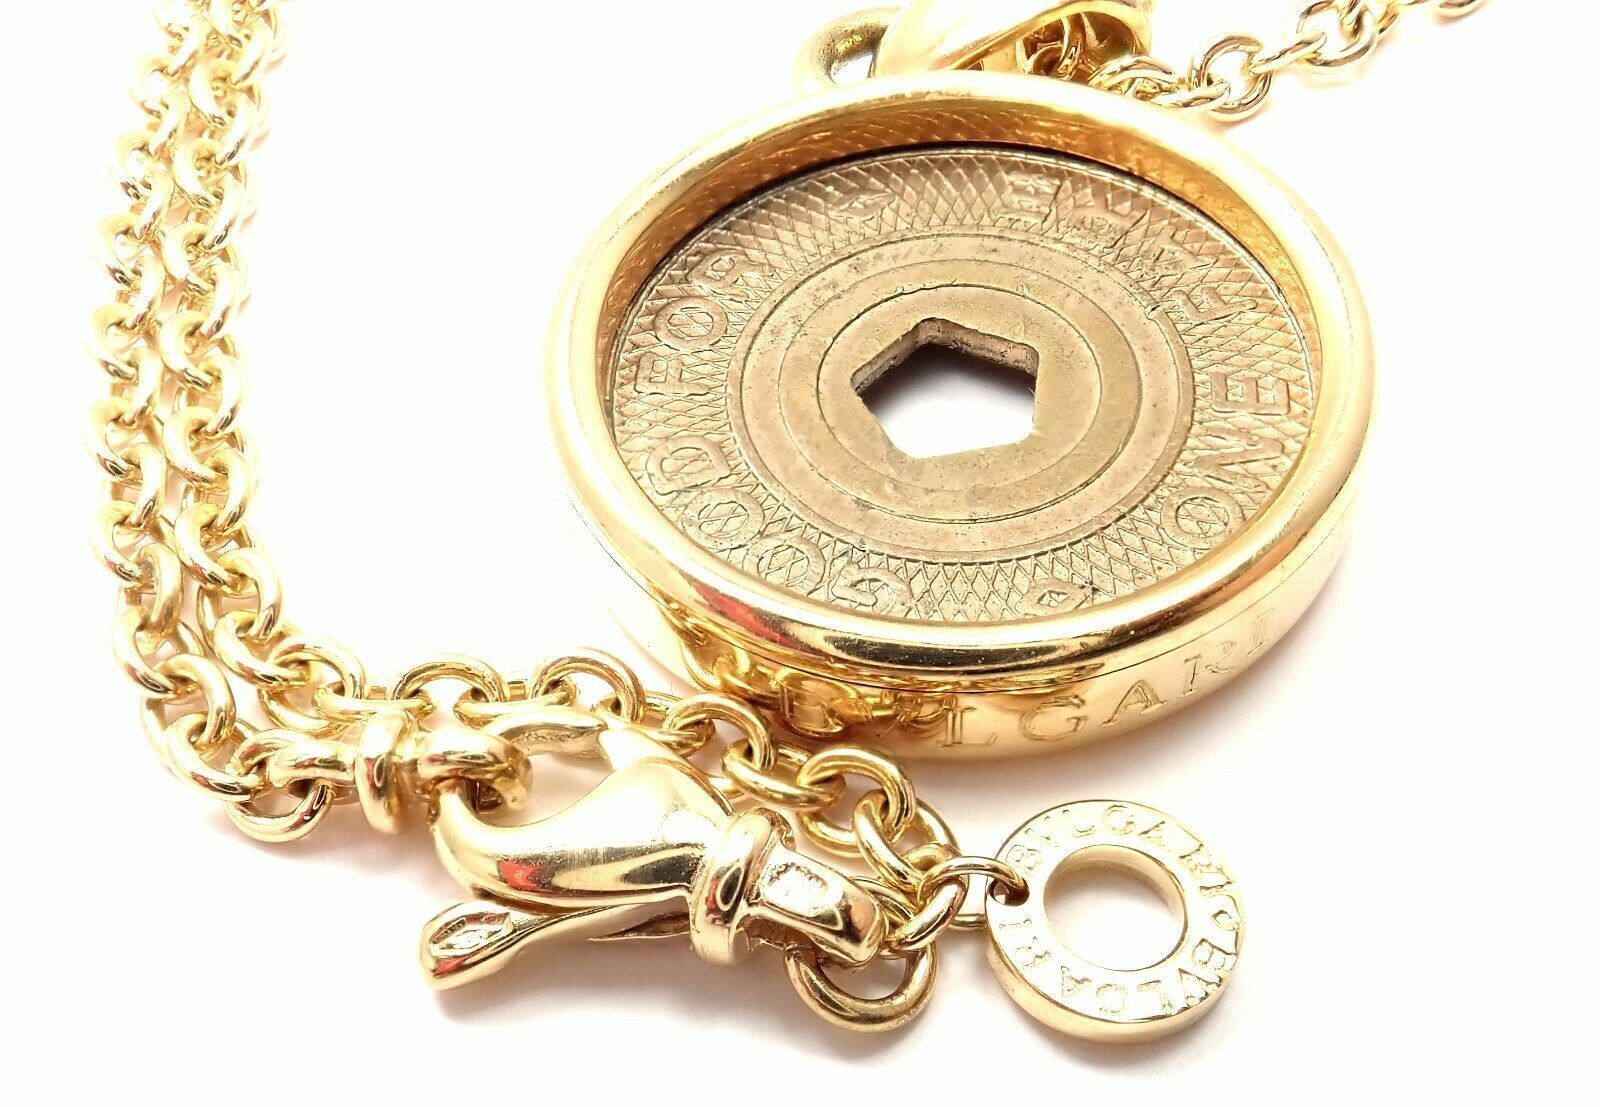 Bvlgari Jewelry & Watches:Fine Jewelry:Necklaces & Pendants Rare! Authentic Bulgari Bvlgari 18k Yellow Gold NYC Subway Token Lim Ed Necklace